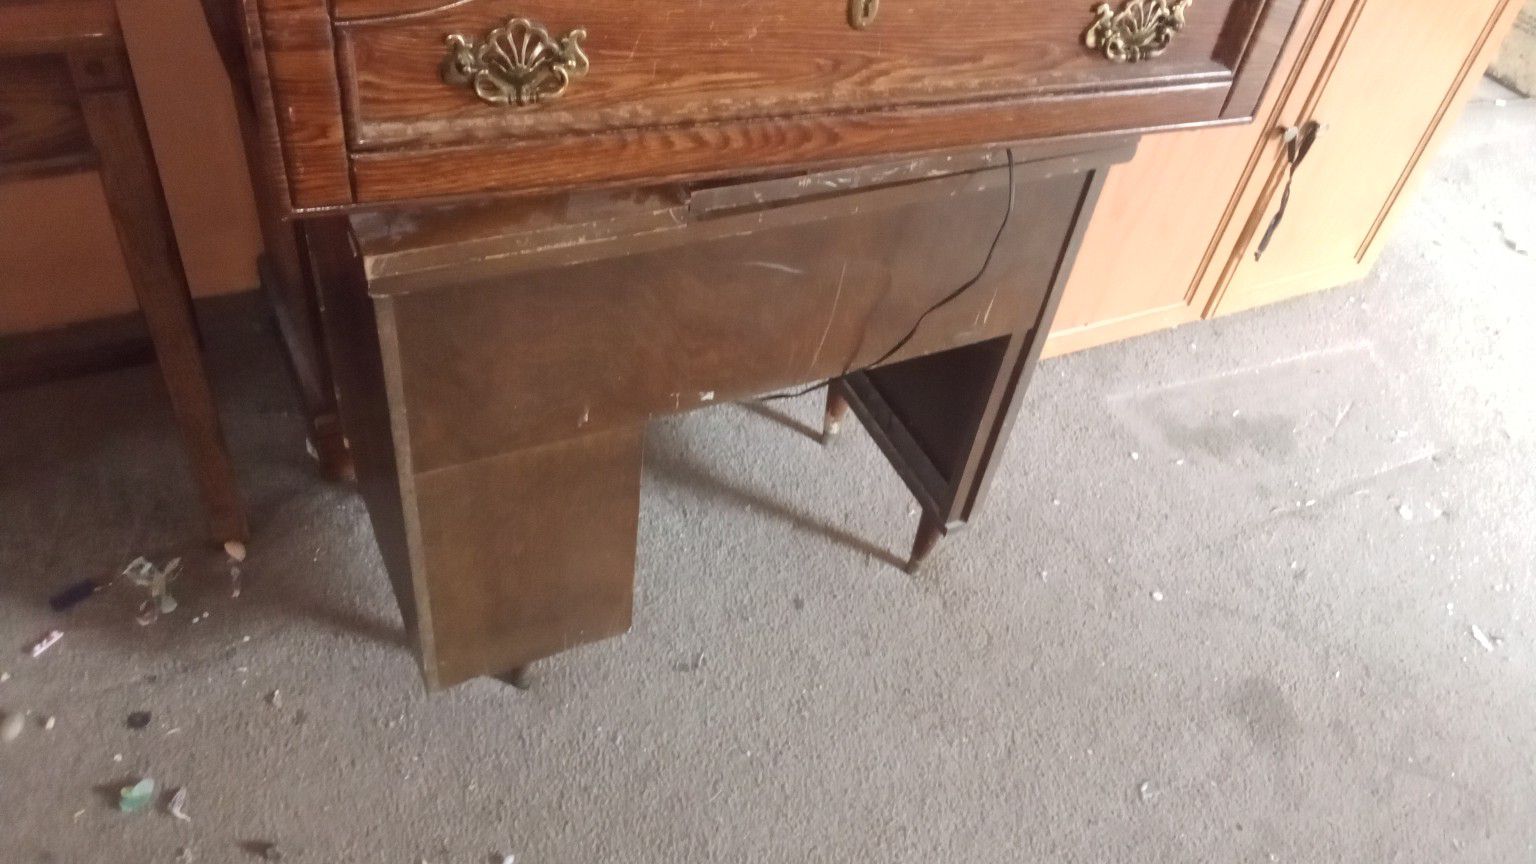 Antique Folding Sewing Machine Desk 